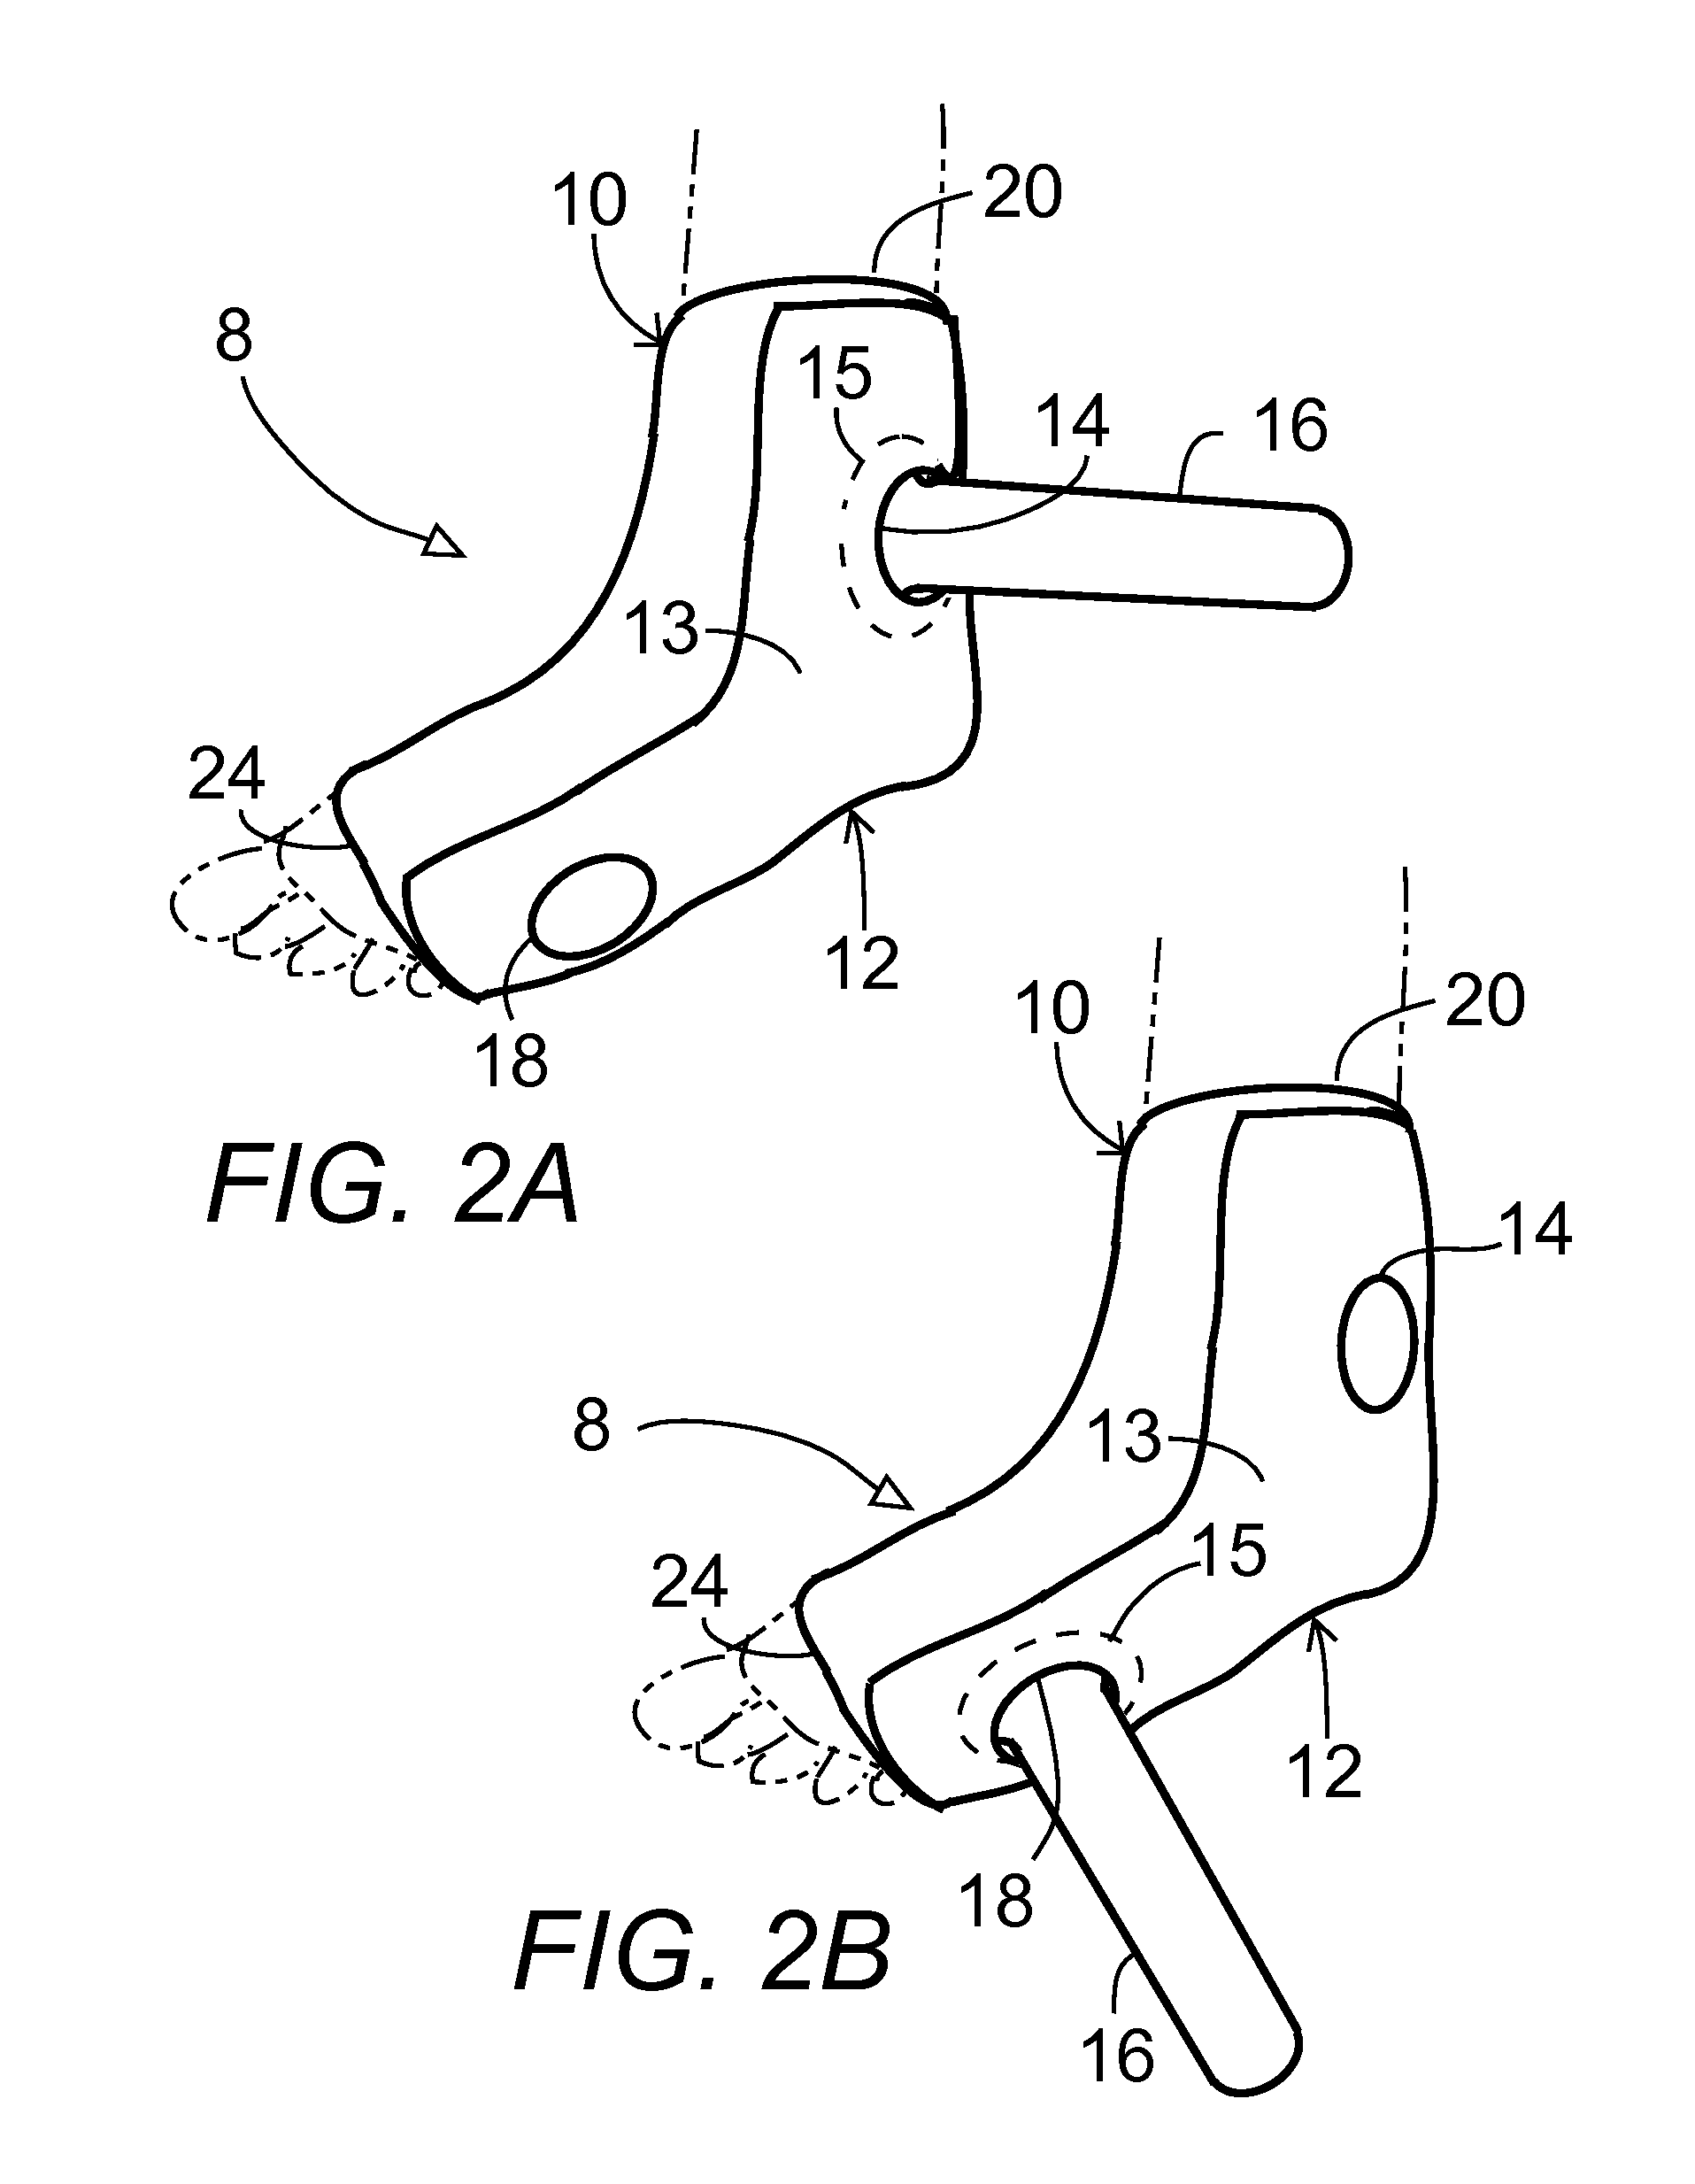 Foot sleeve dildo harness